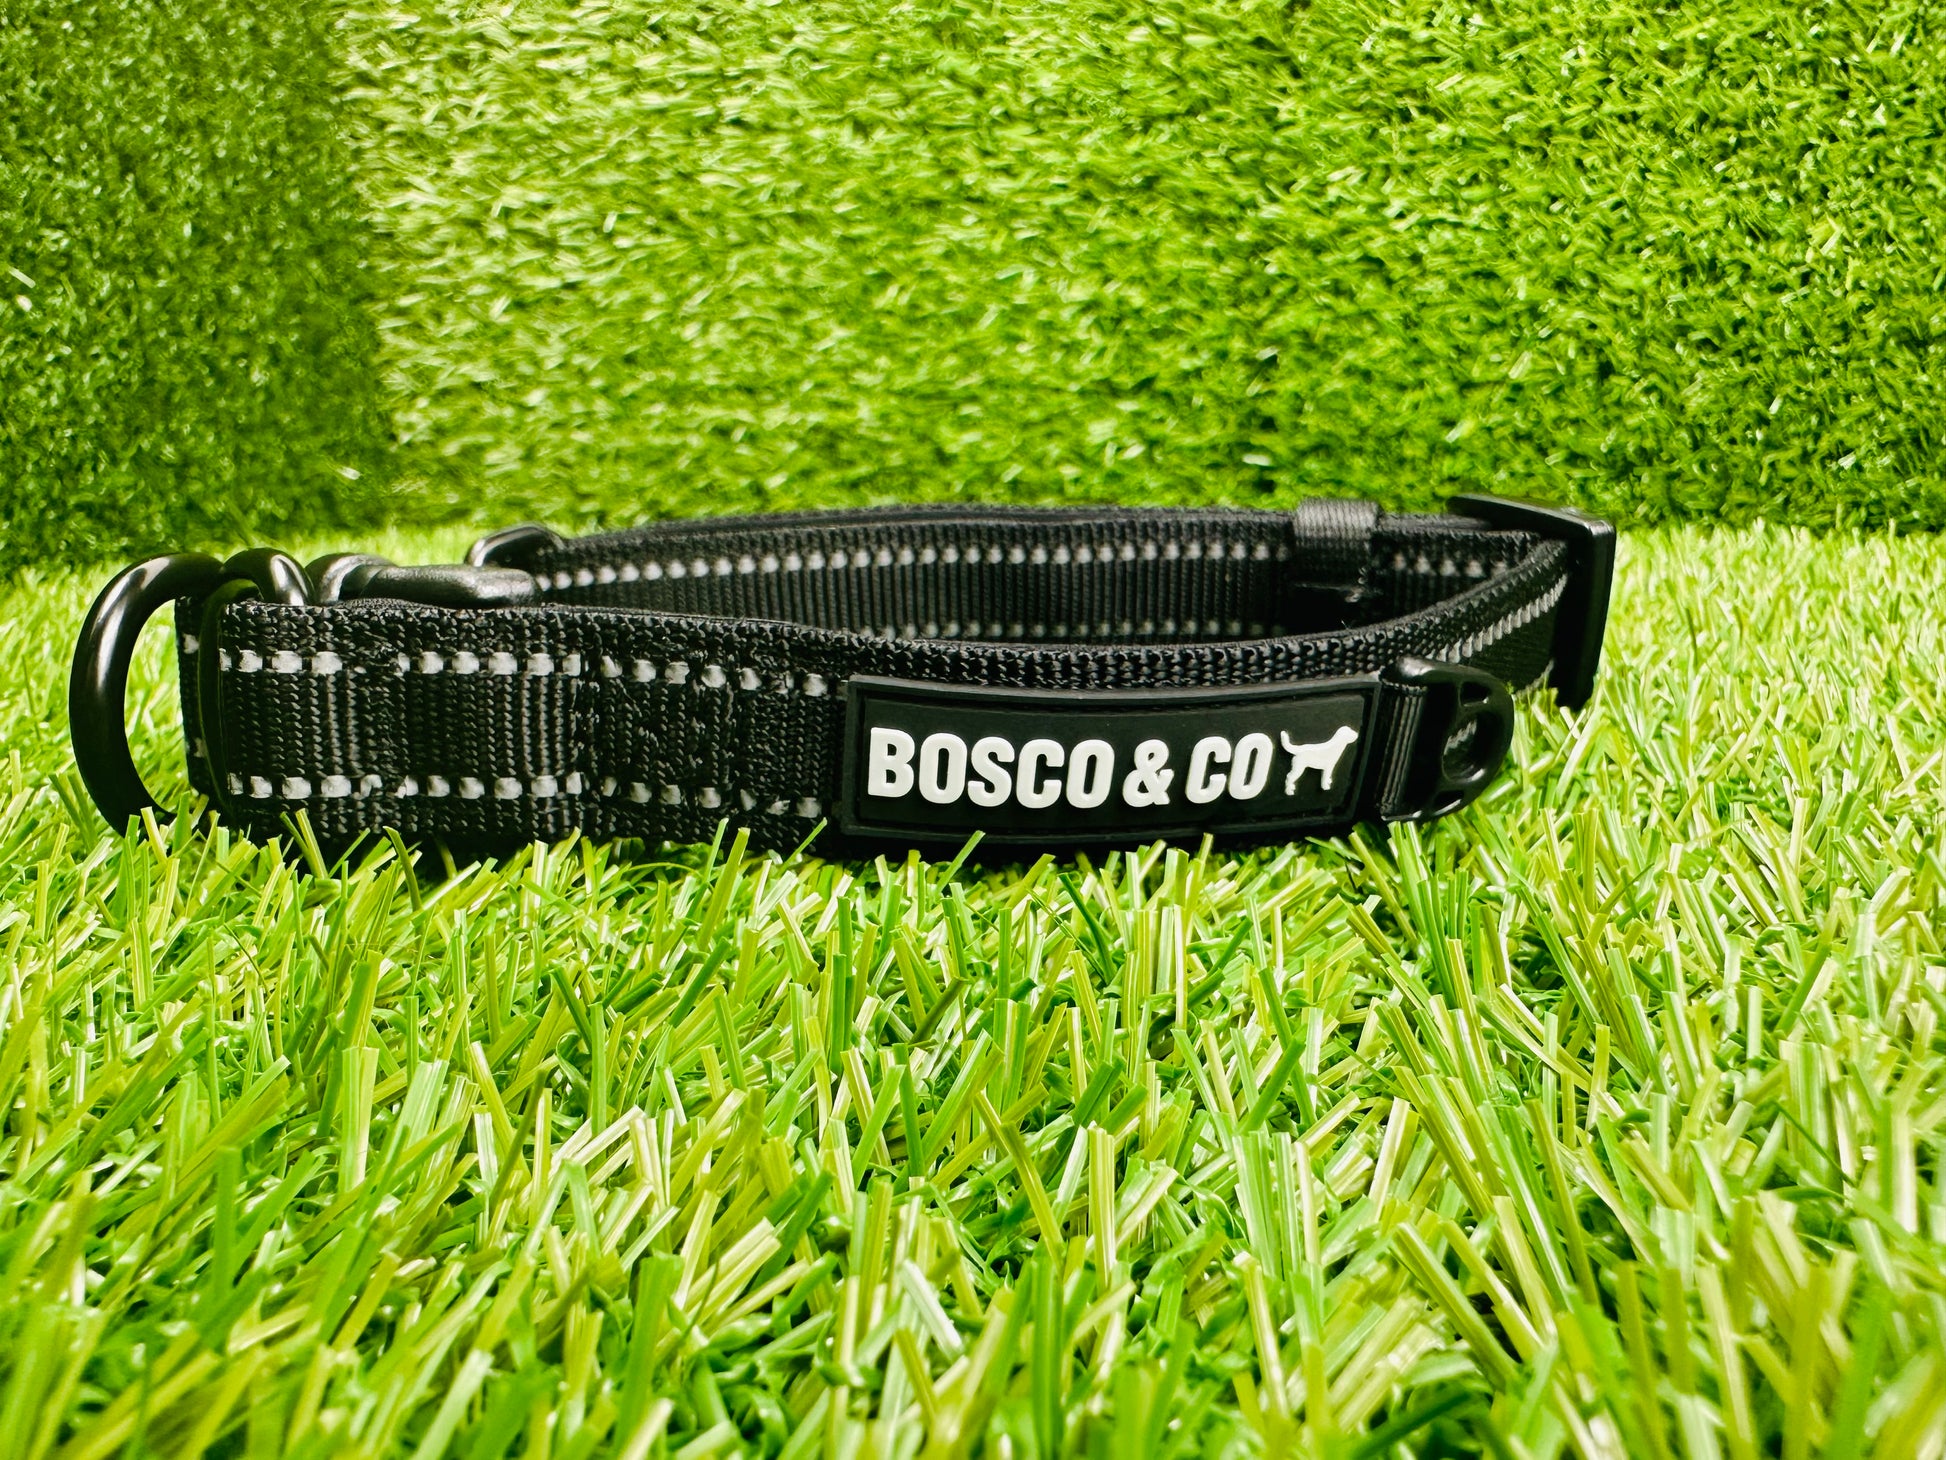 Bosco & Co plain Black collar